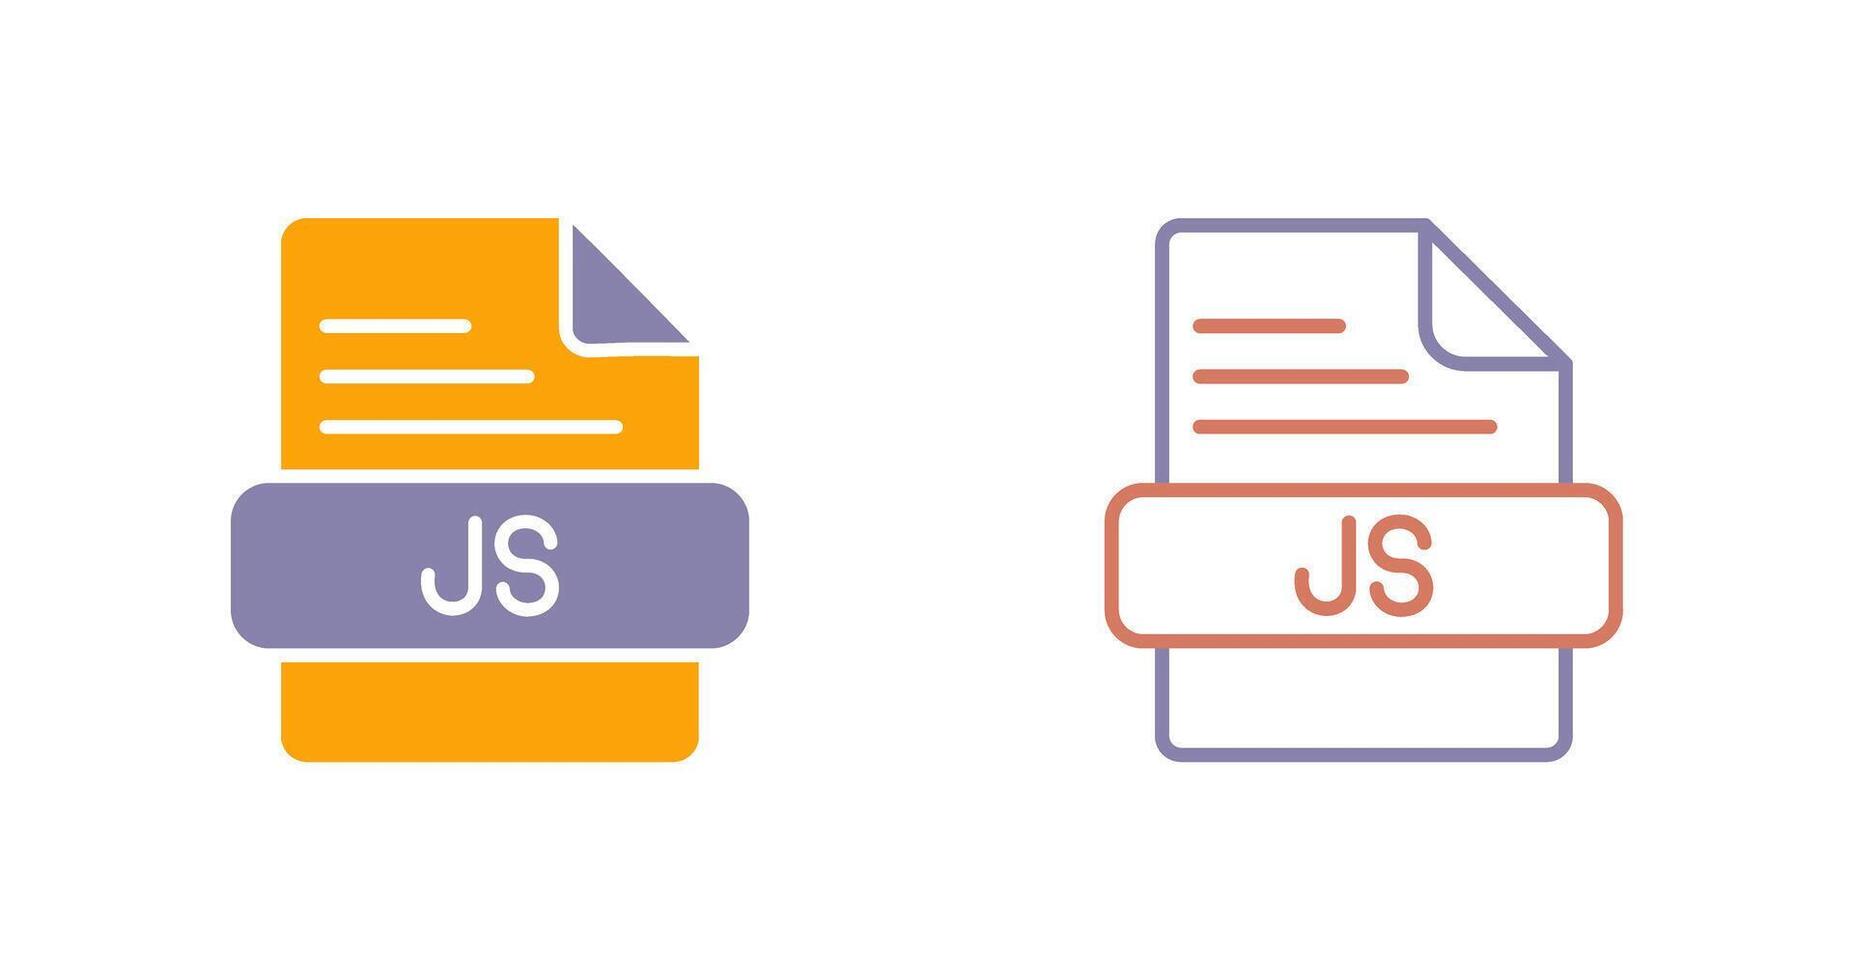 JS Icon Design vector